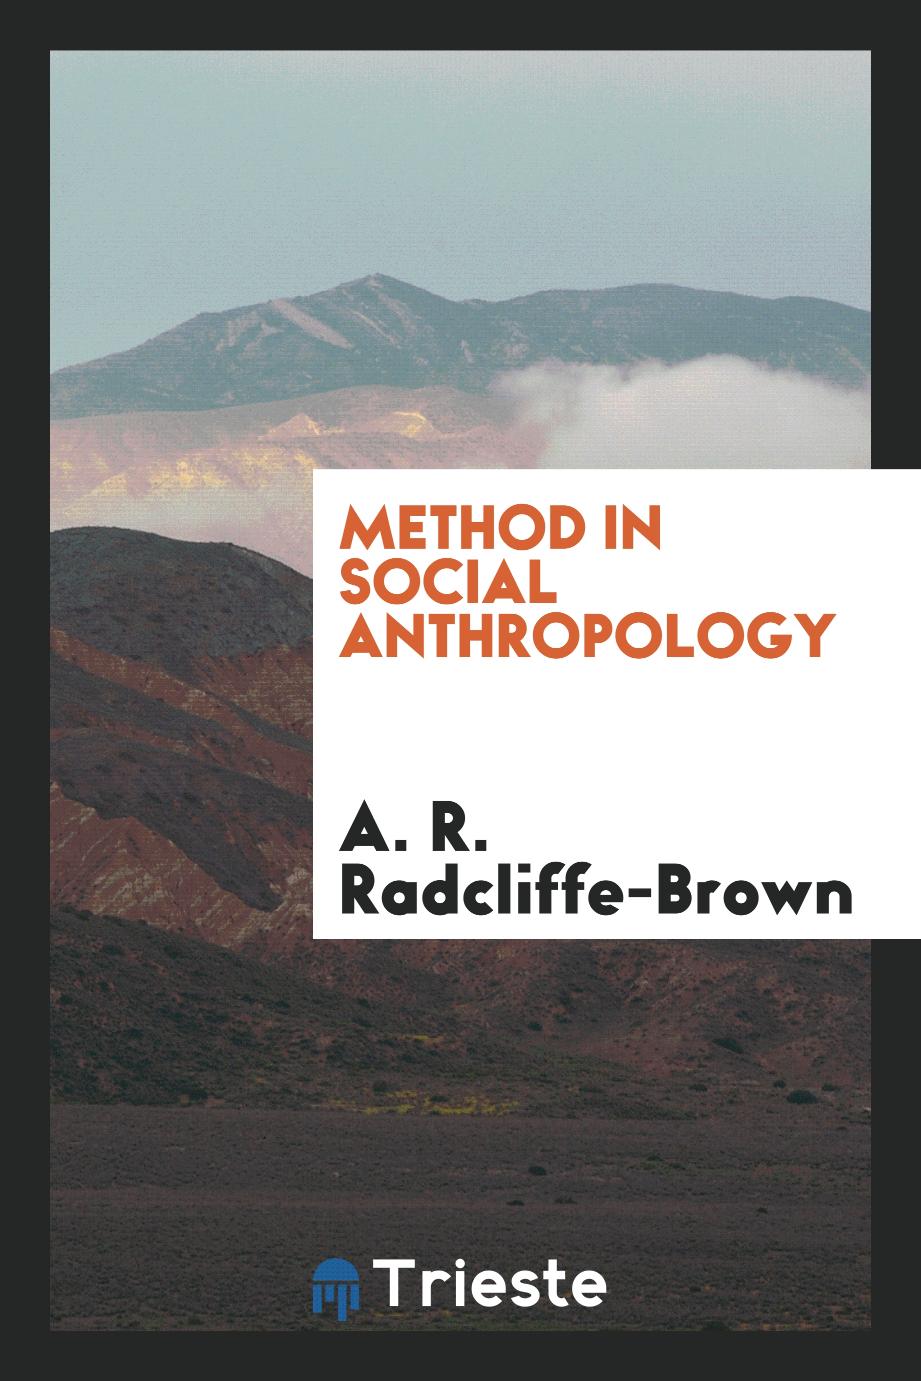 Method in social anthropology